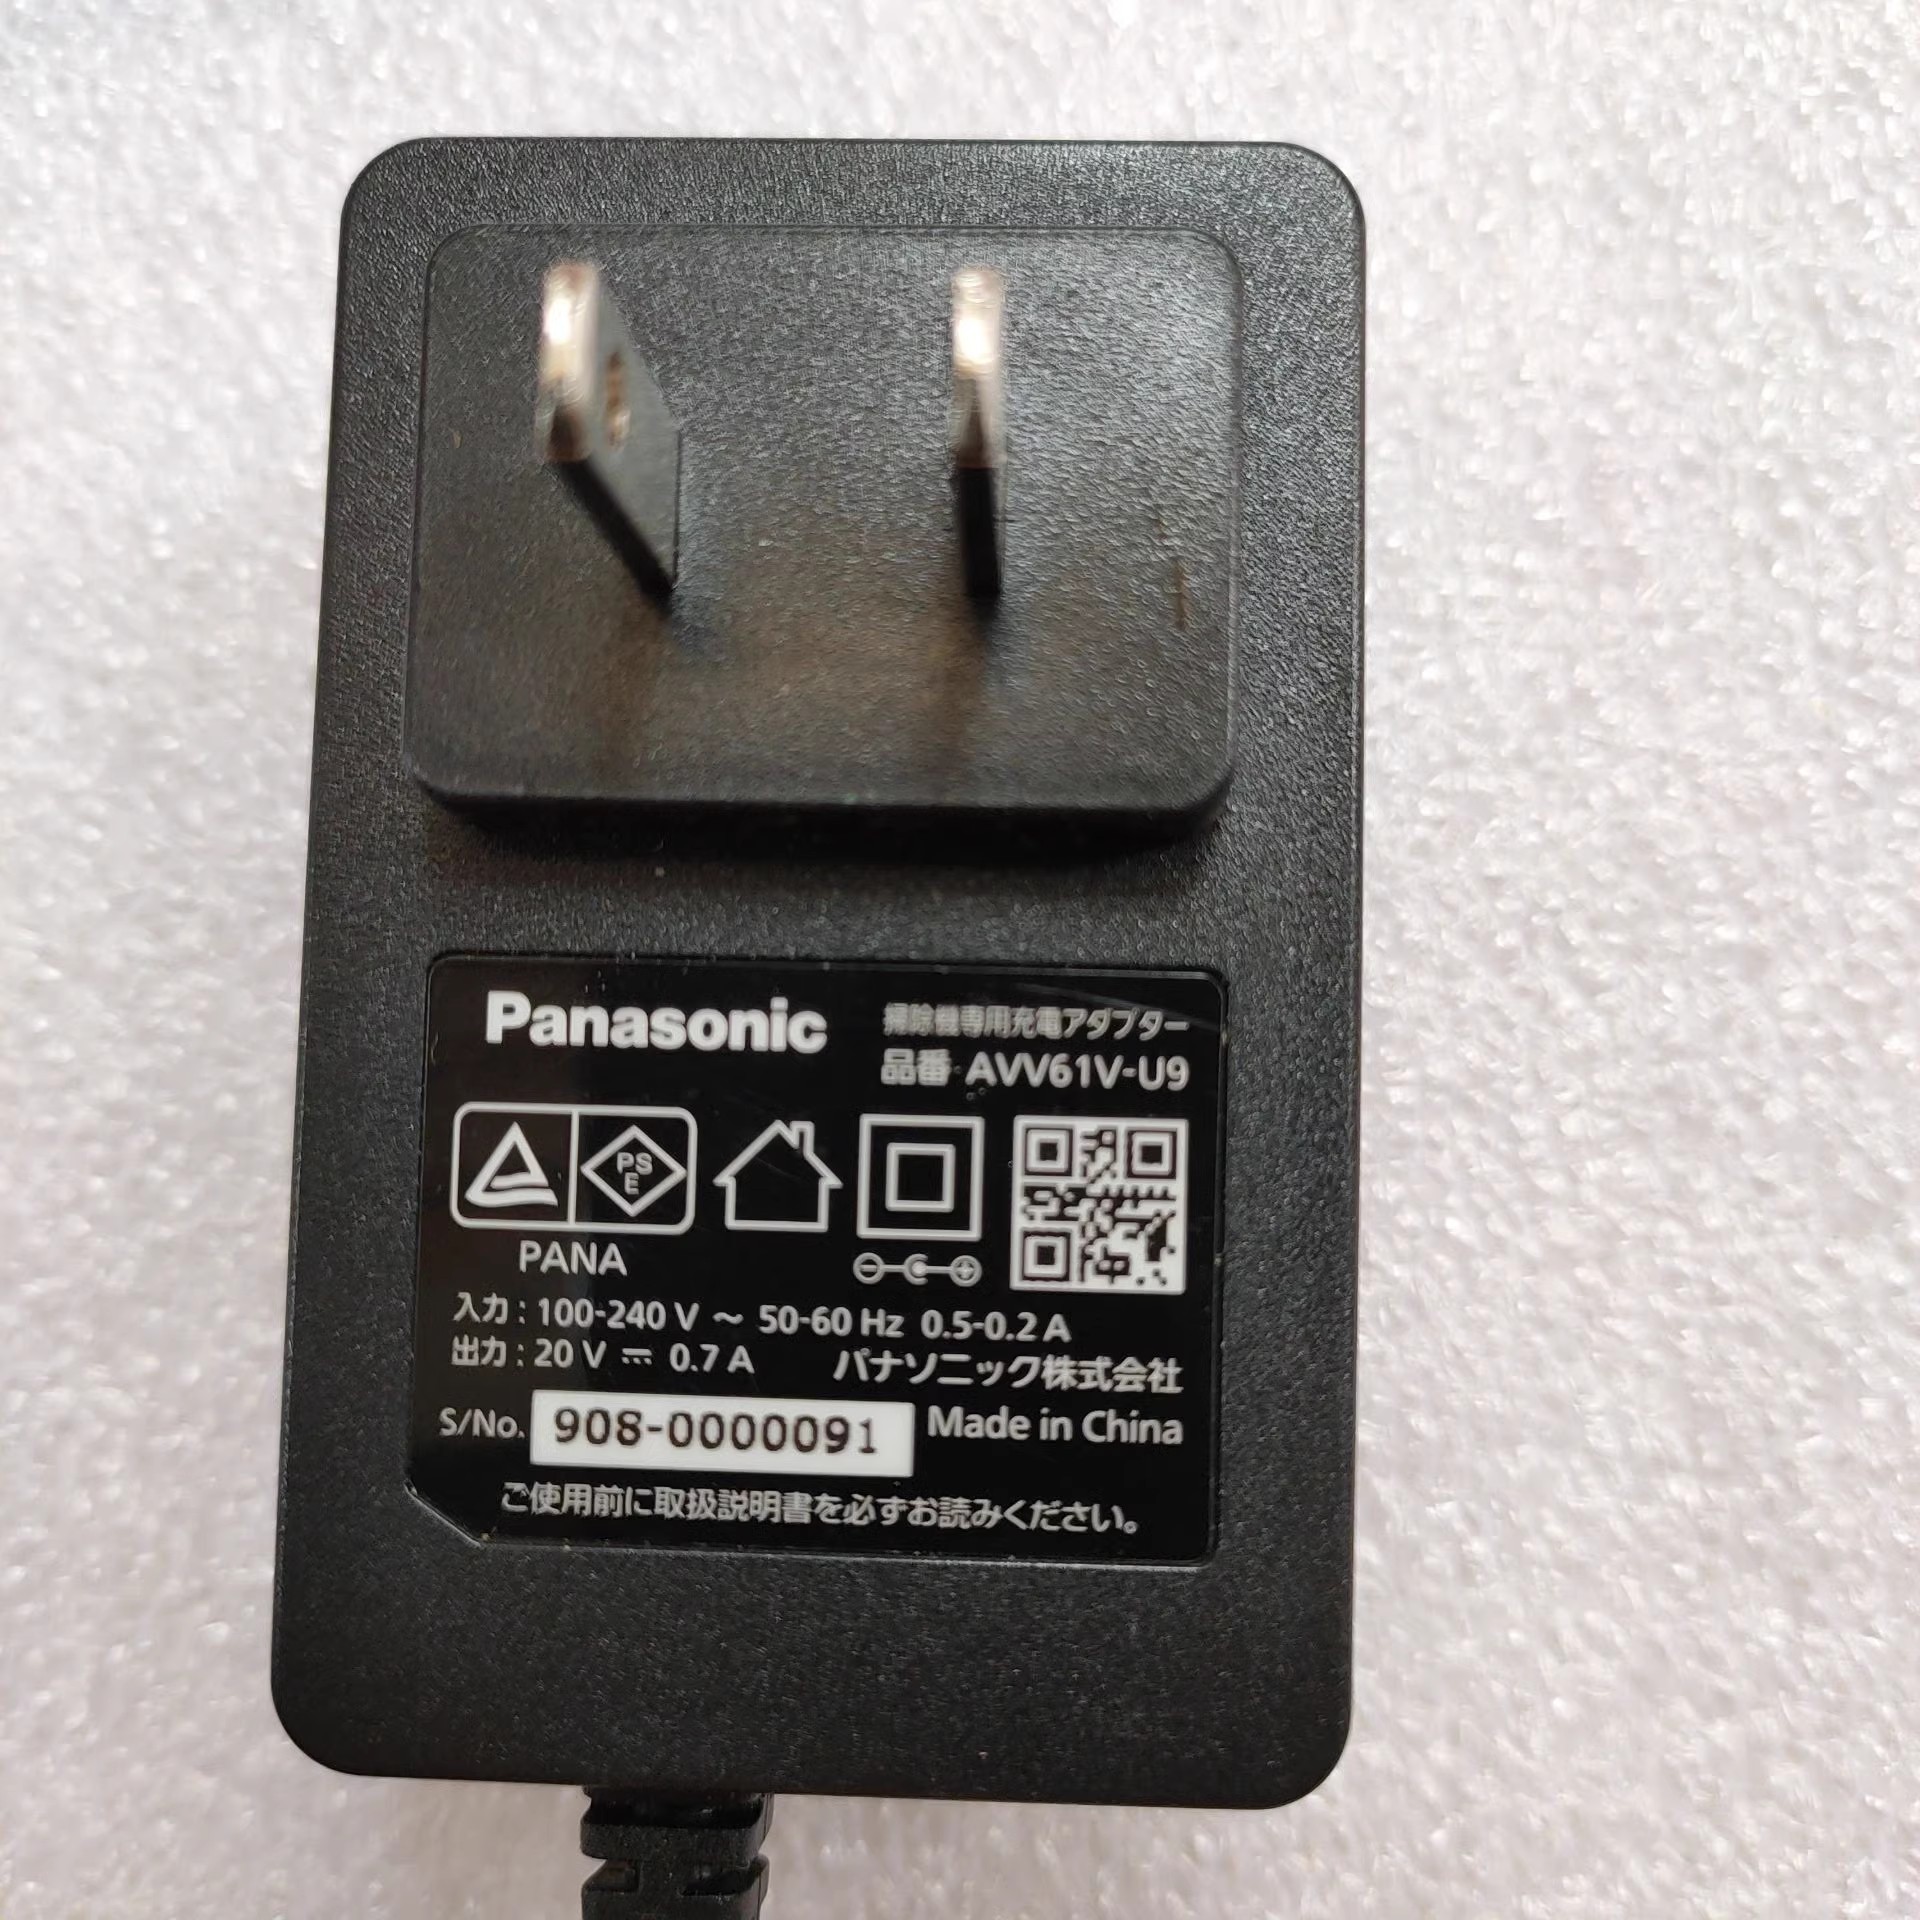 *Brand NEW* Panasonic AVV61V-U8 AVV61V-U9 20V 0.7A AC DC ADAPTHE POWER Supply